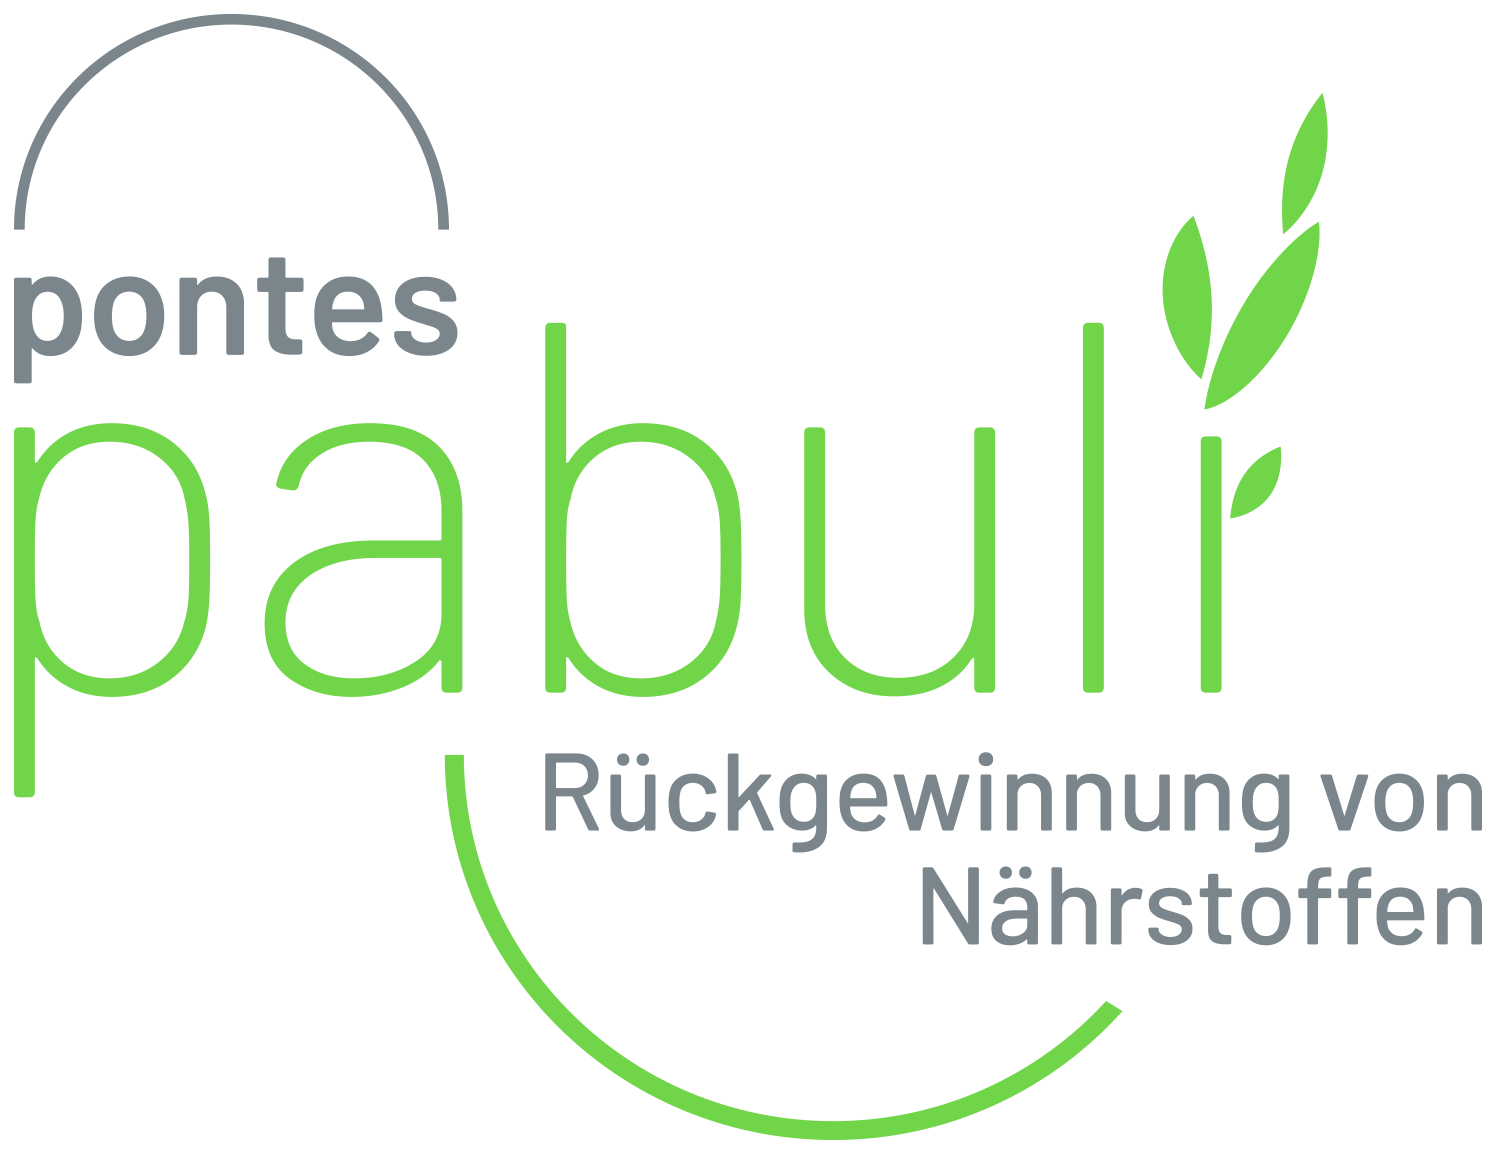 Pontes Pabuli GmbH